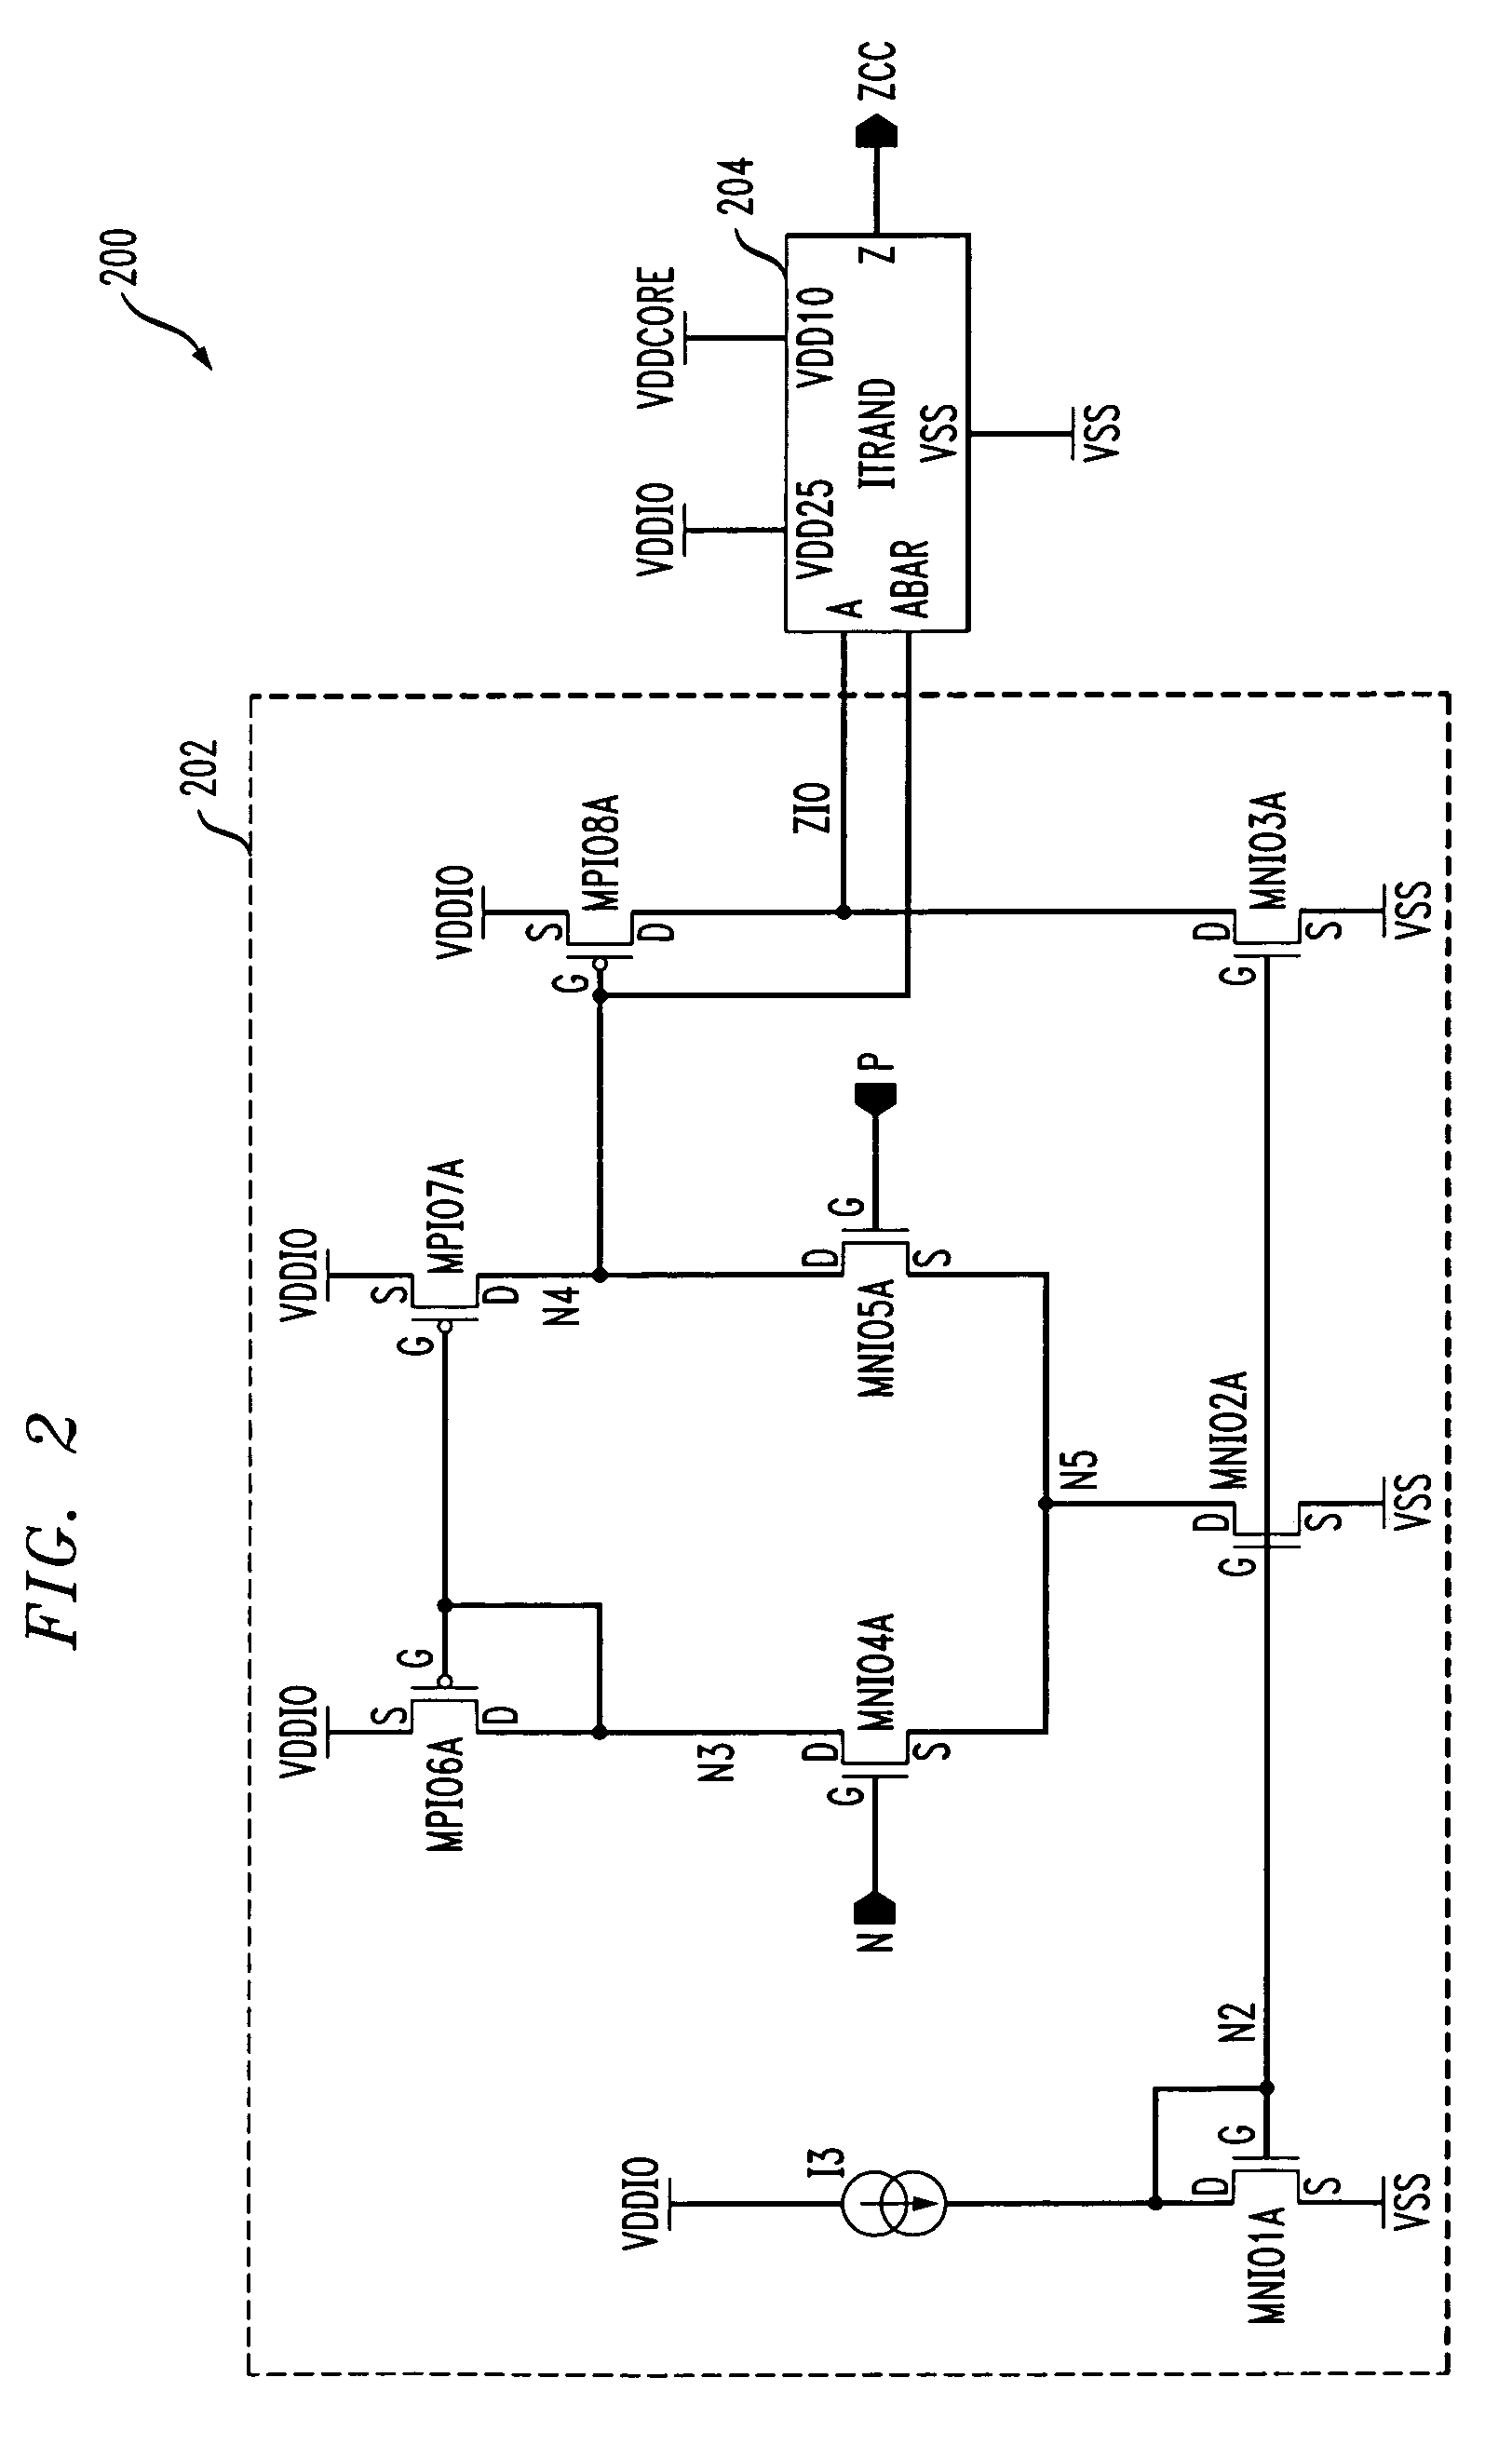 Circuit having enhanced input signal range